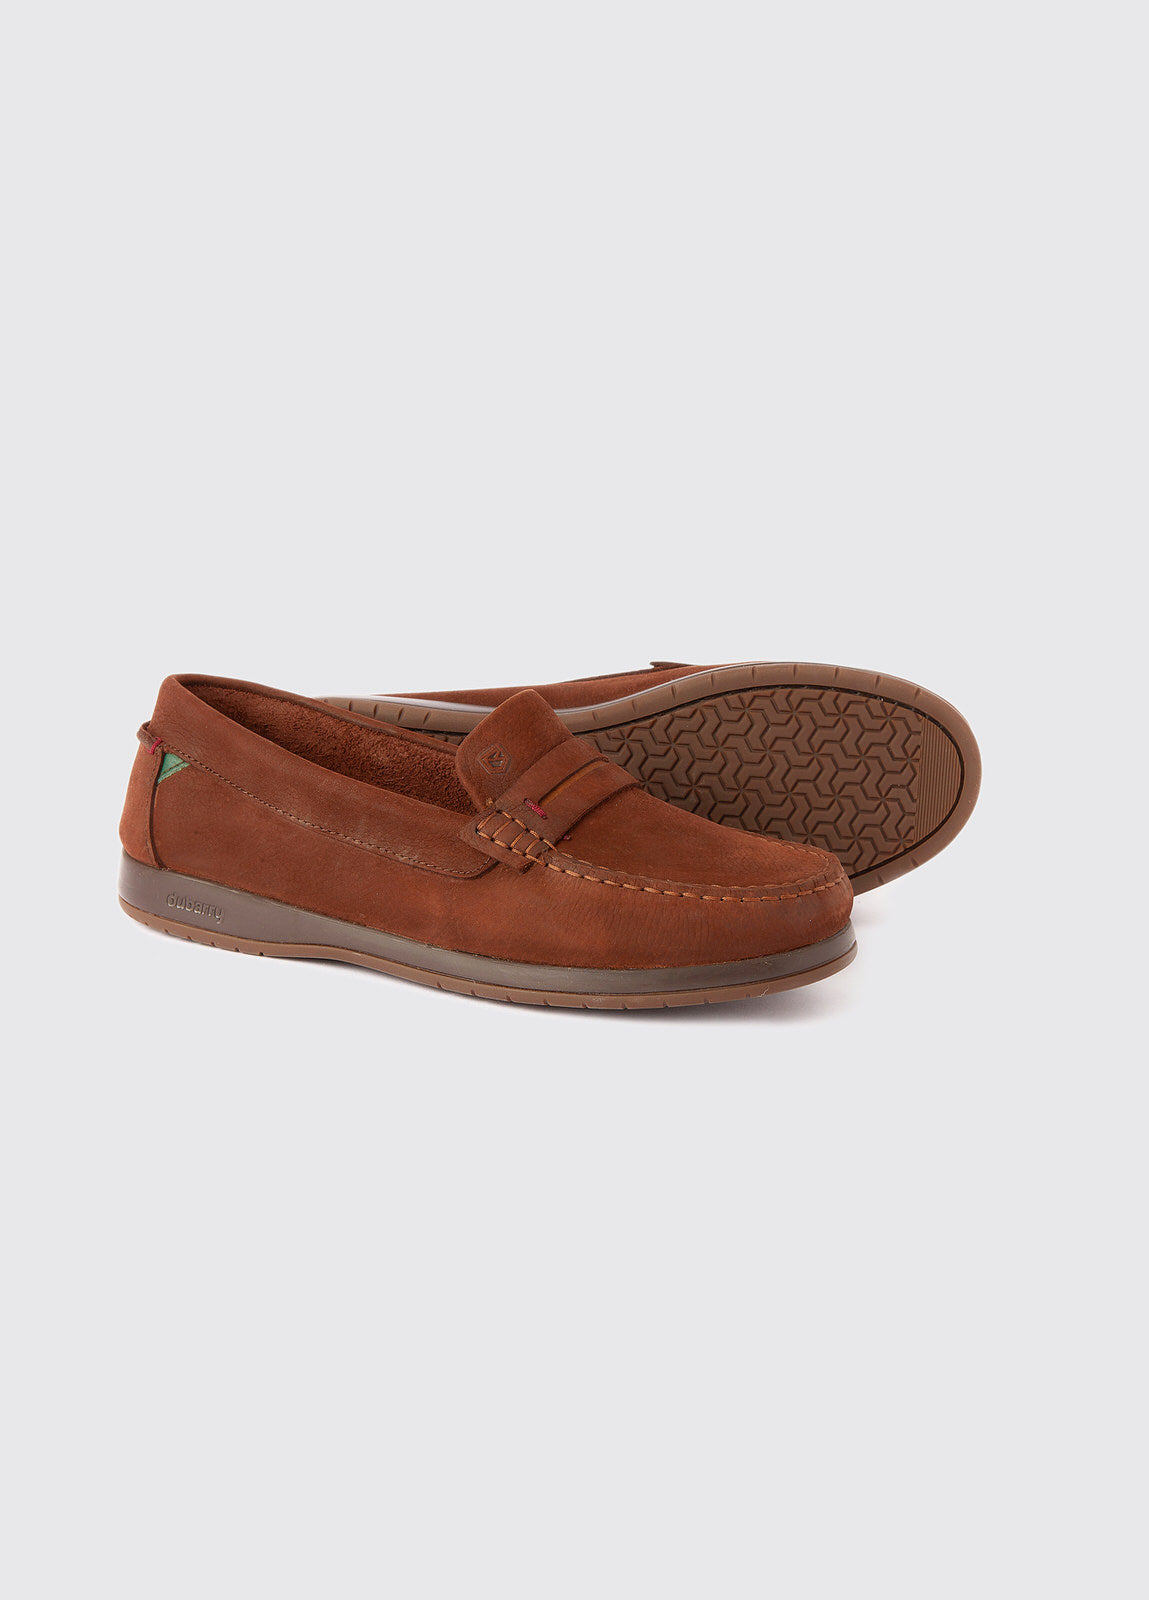 Dubarry Mens Mizen X LT Deck shoes - Walnut